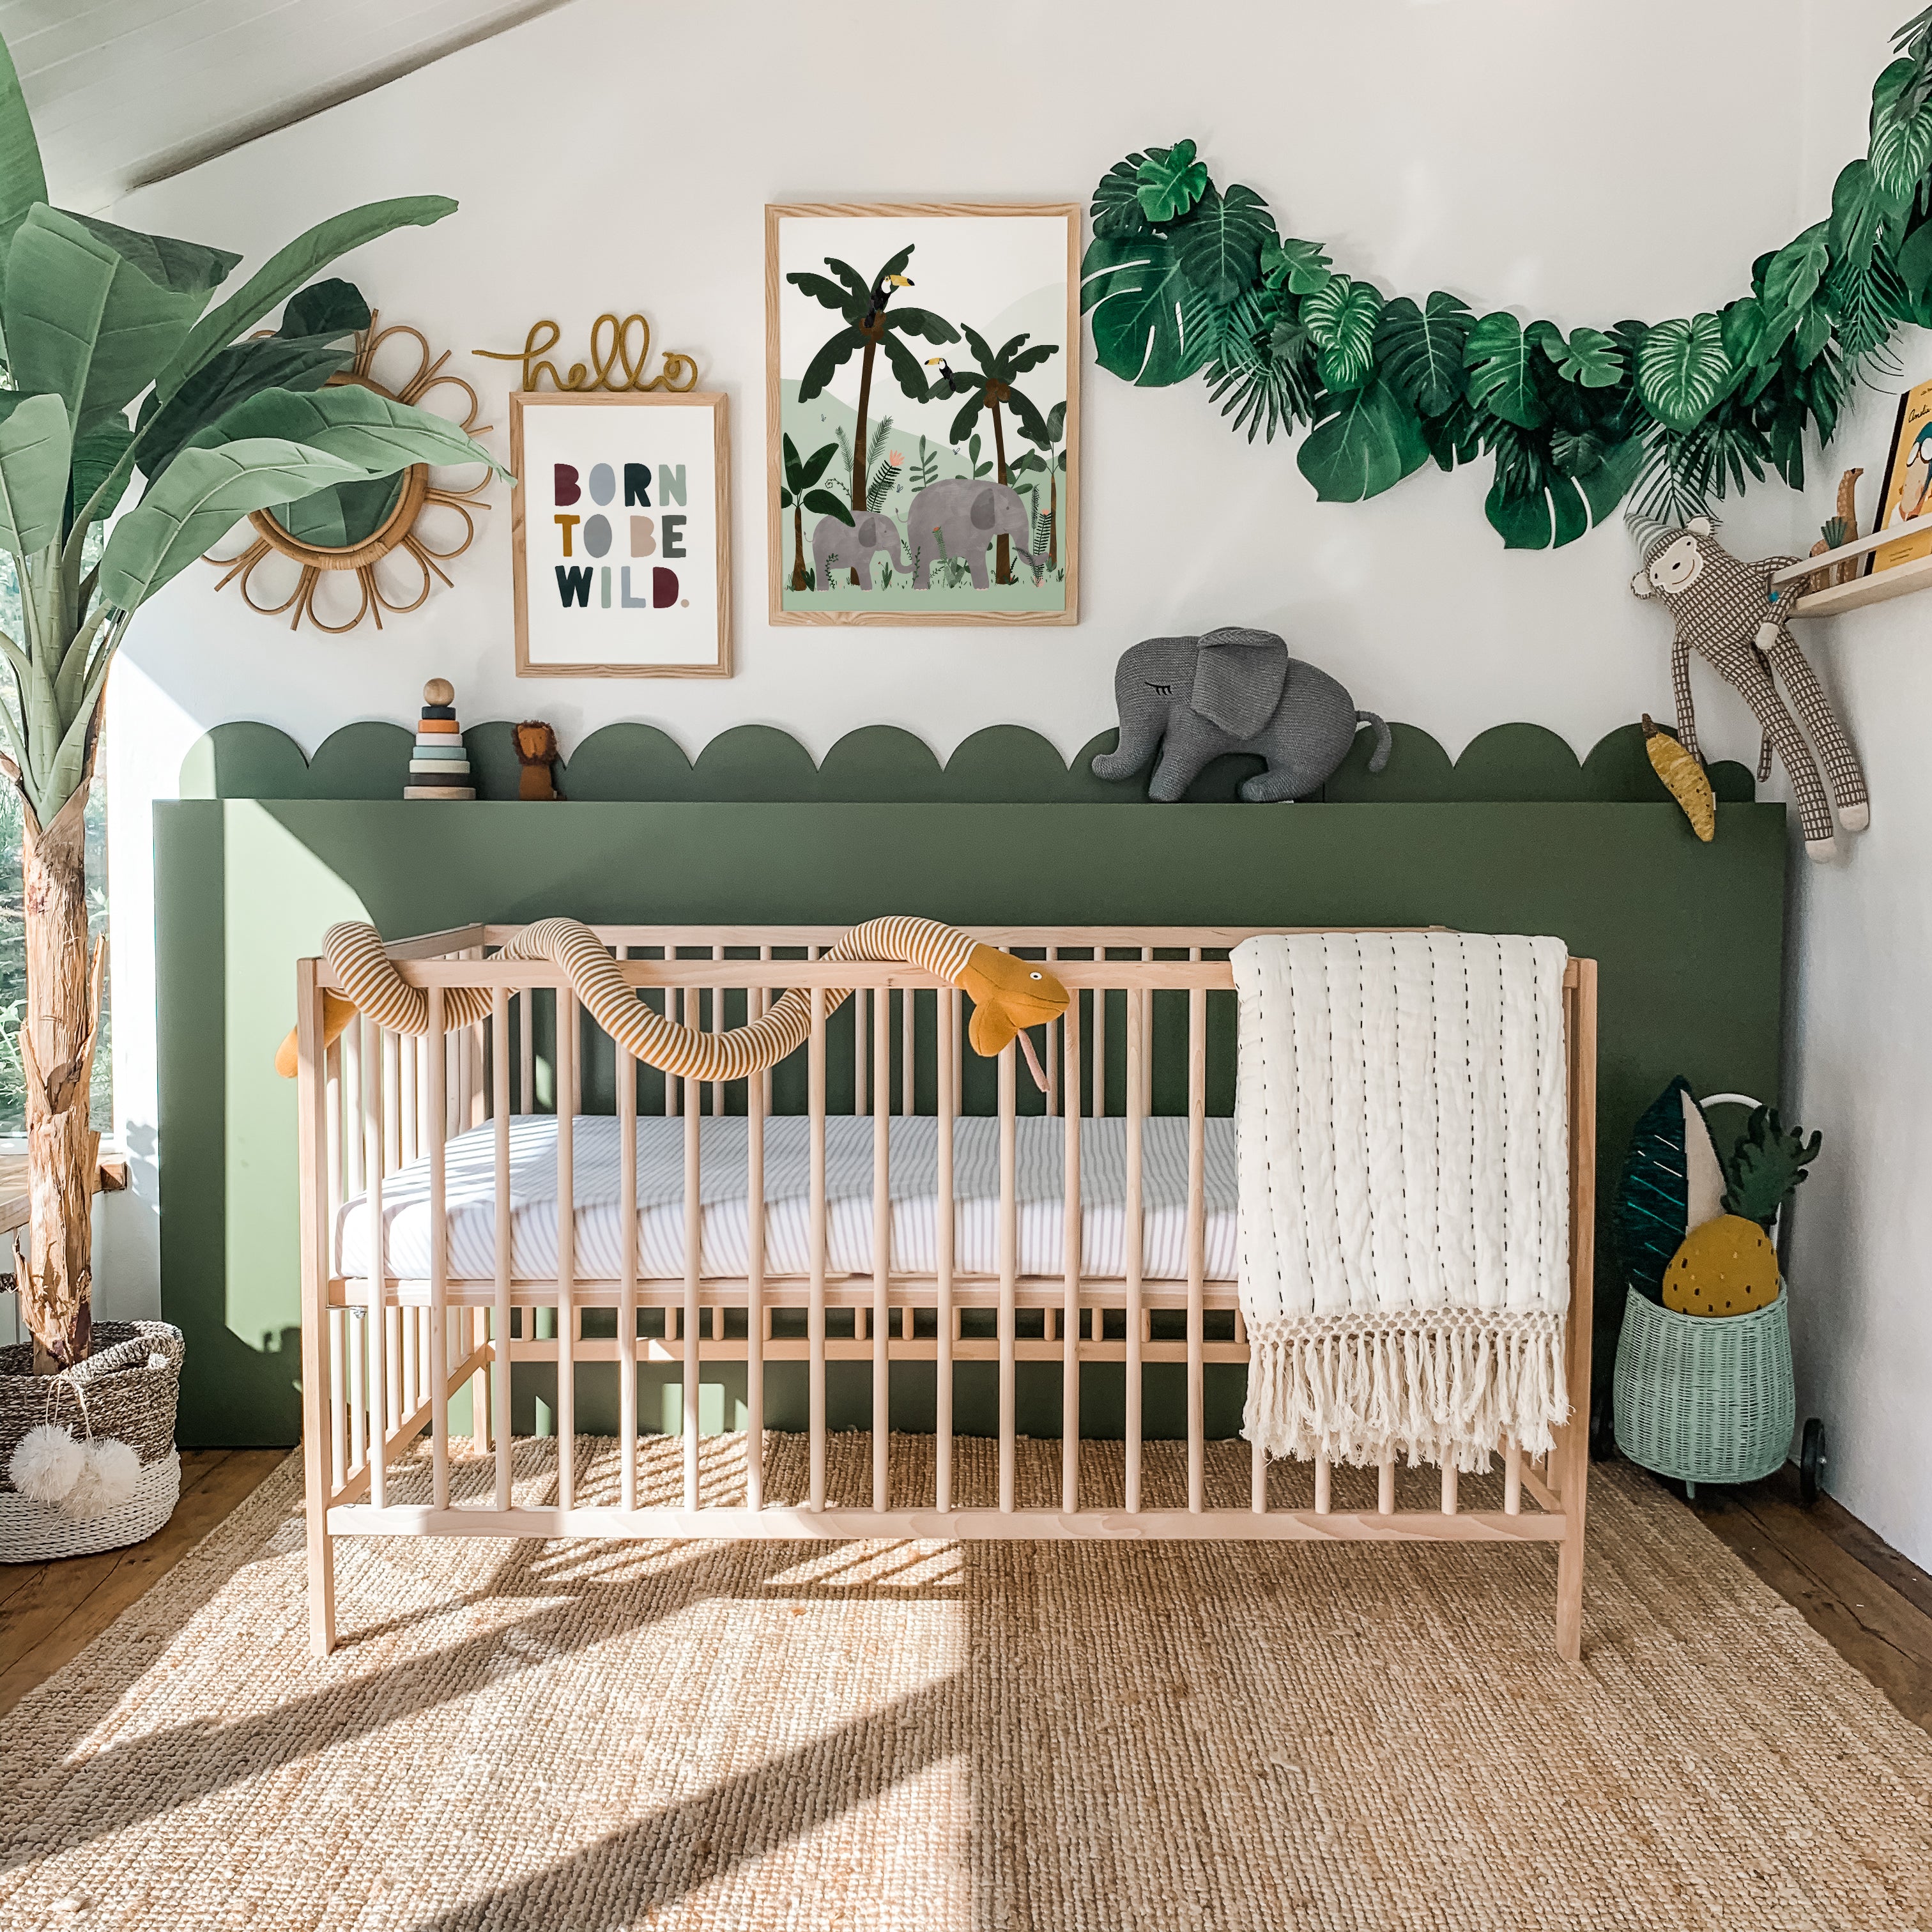 kids-jungle-theme-room-cheap-nursery-decor-ideas-diy-nursery-ikea-cot-ideas-sniglar-ikea-rug-jute-rug